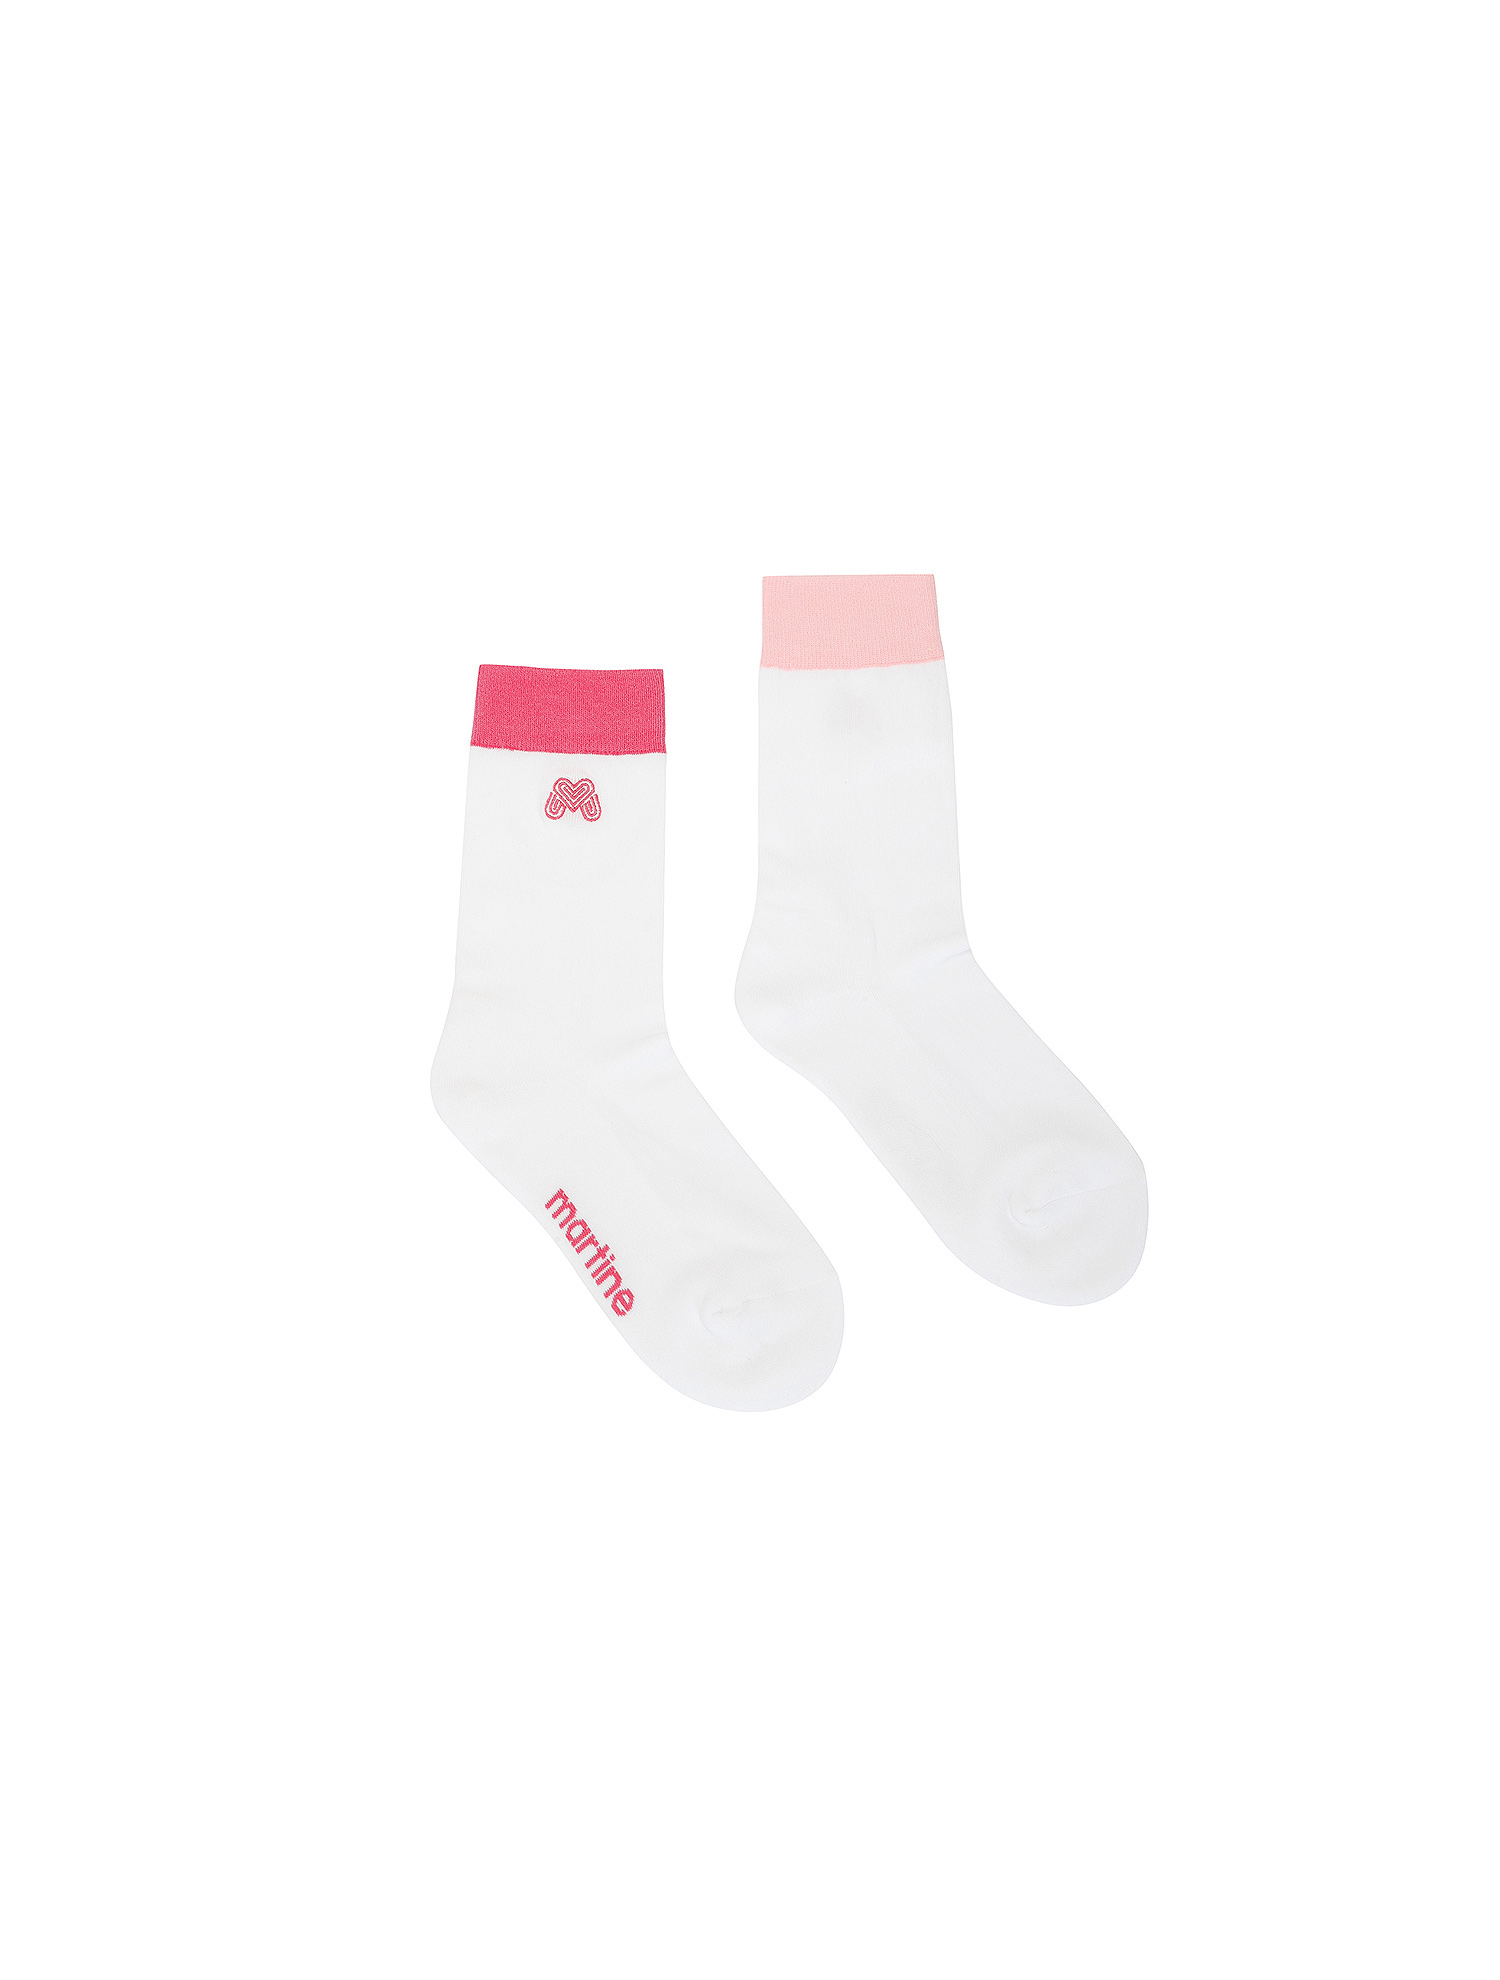 Color Point Middle Socks_Pink (QWAESC10273)